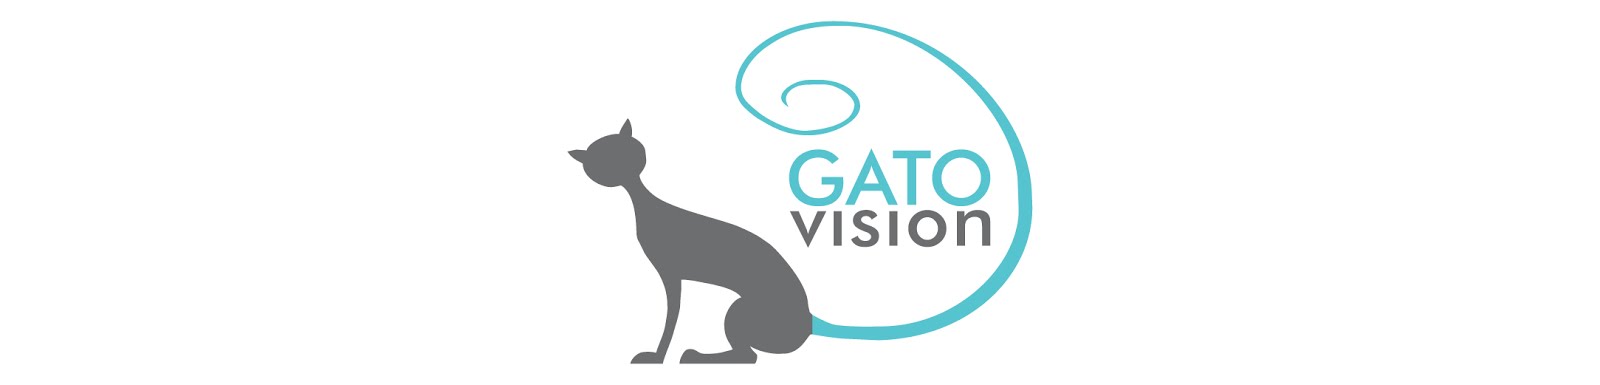 Gato Vision Blog